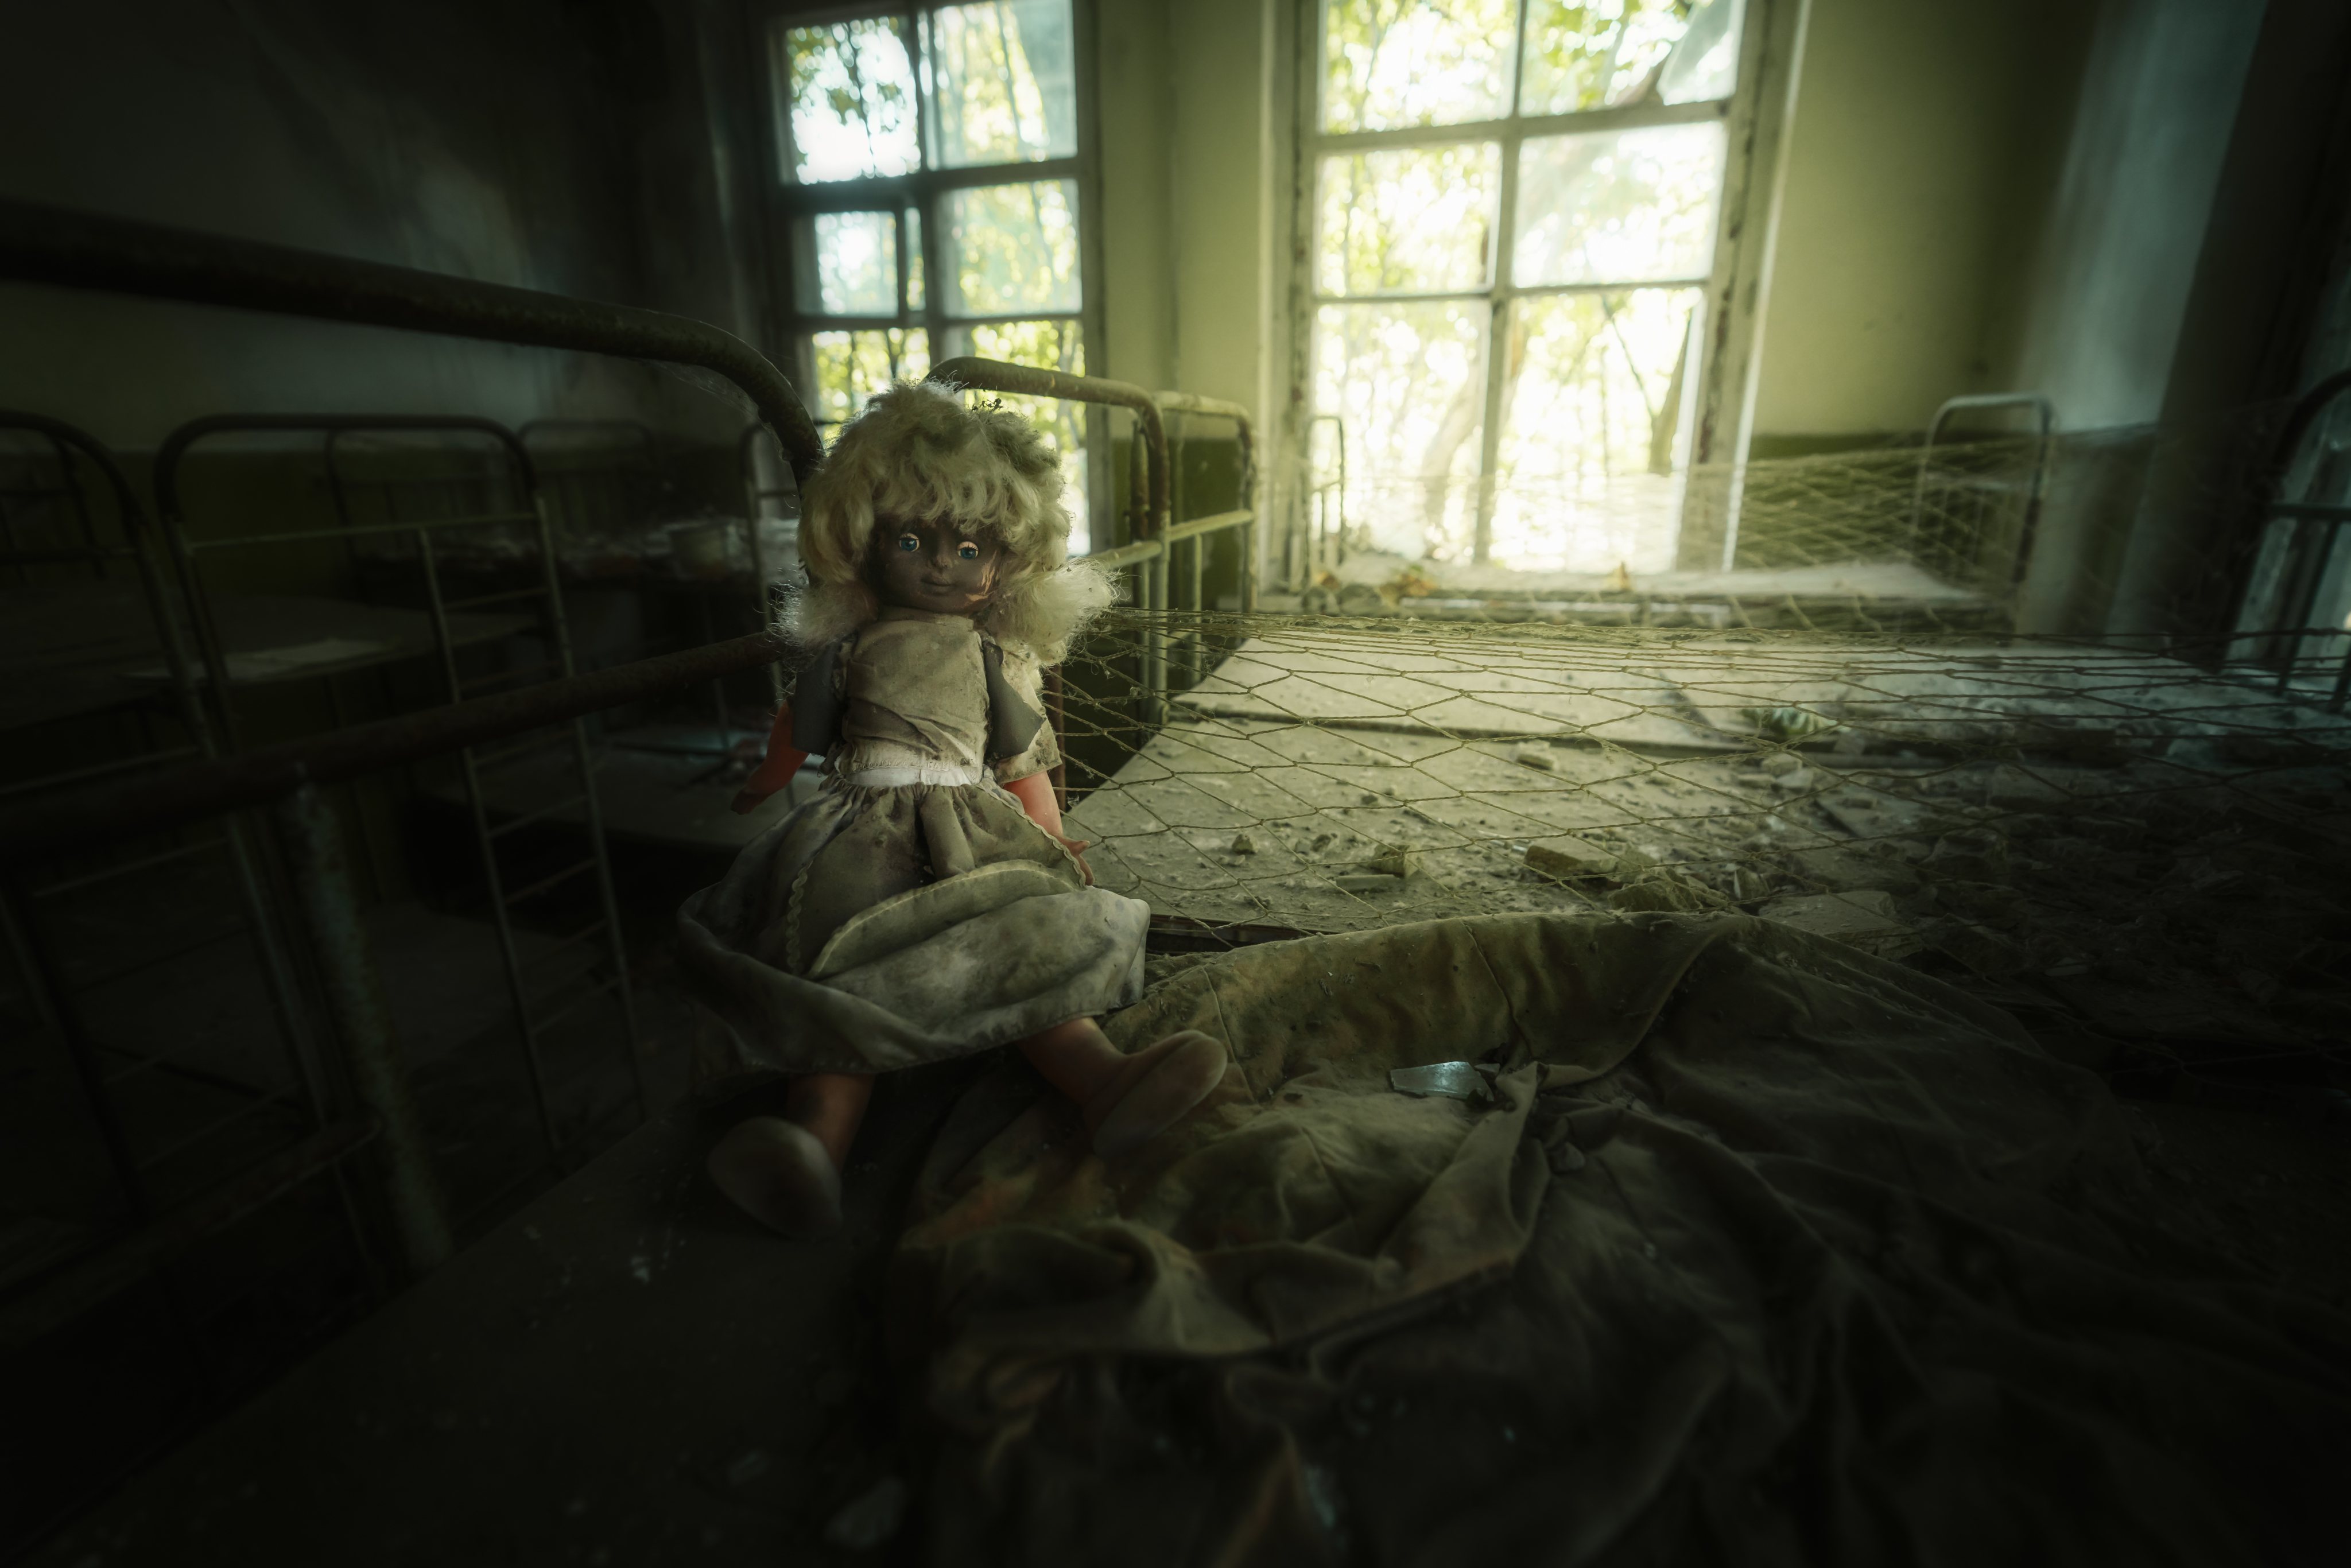 Abandoned doll at Kindergarten  - Kopachi Village, Chernobyl Exclusion Zone, Ukraine